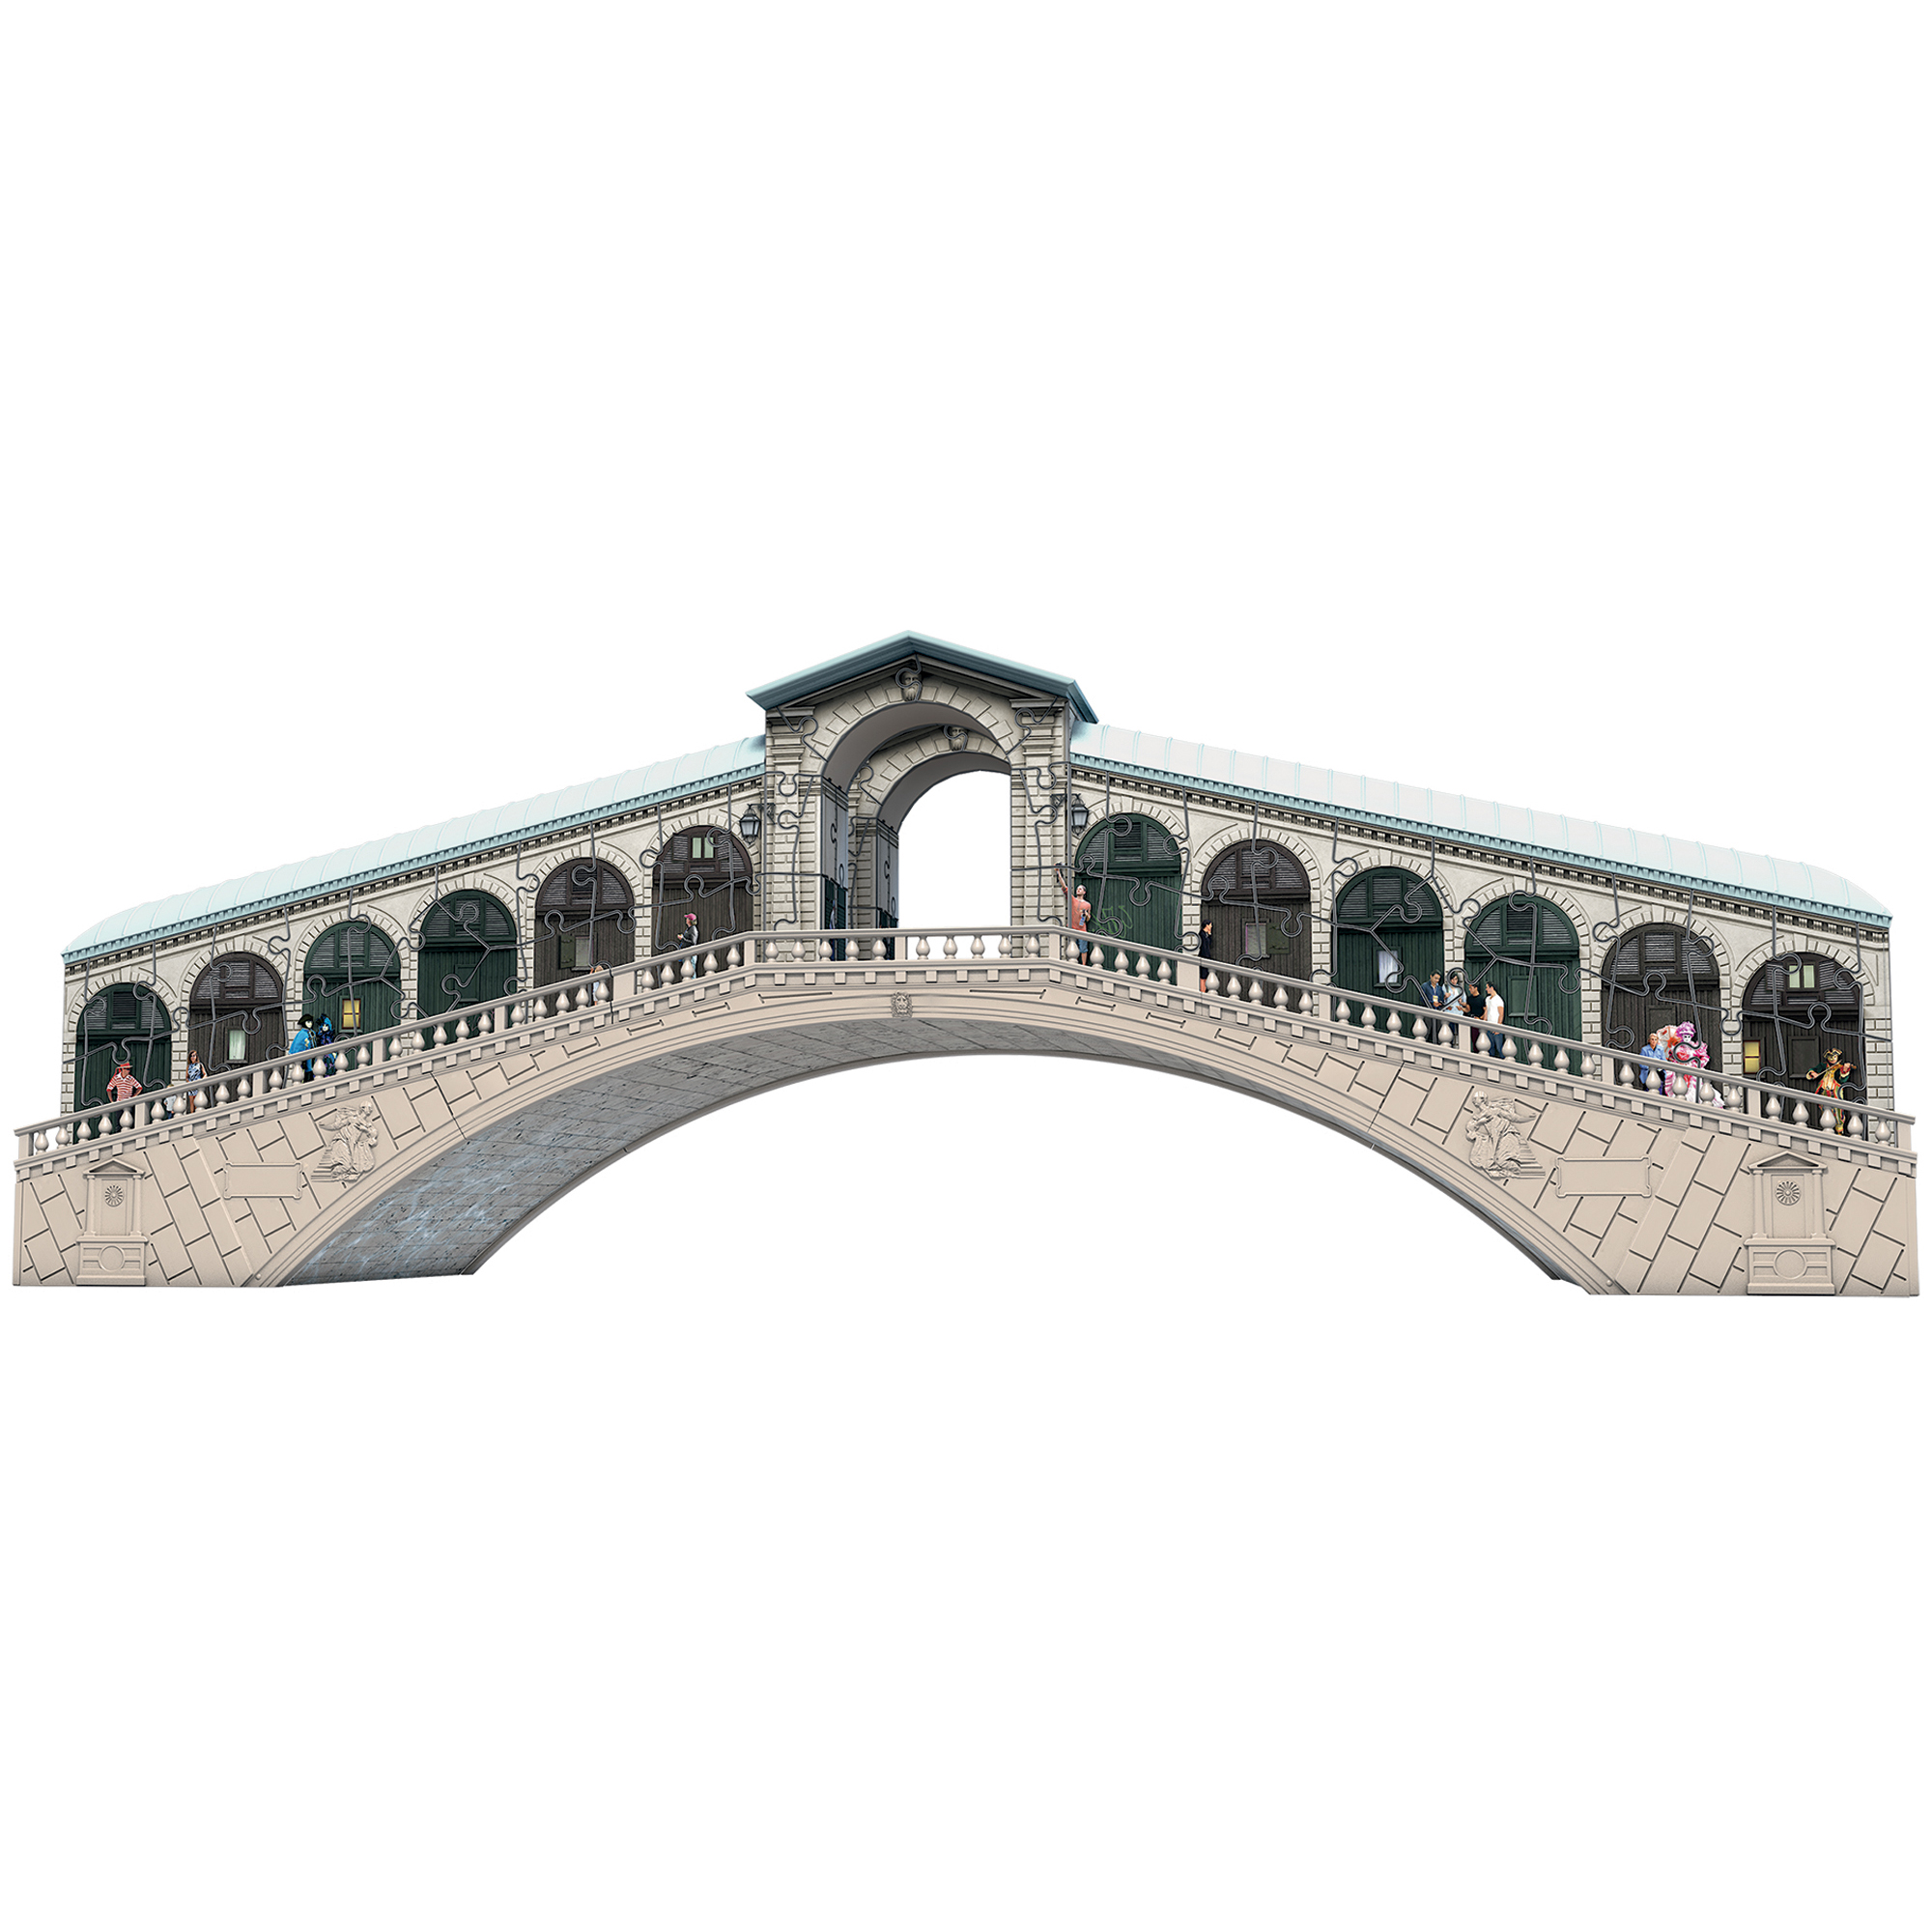 Puzzle 3D Ponte di Rialto, Building Edition, 216 pezzi - Ravensburger